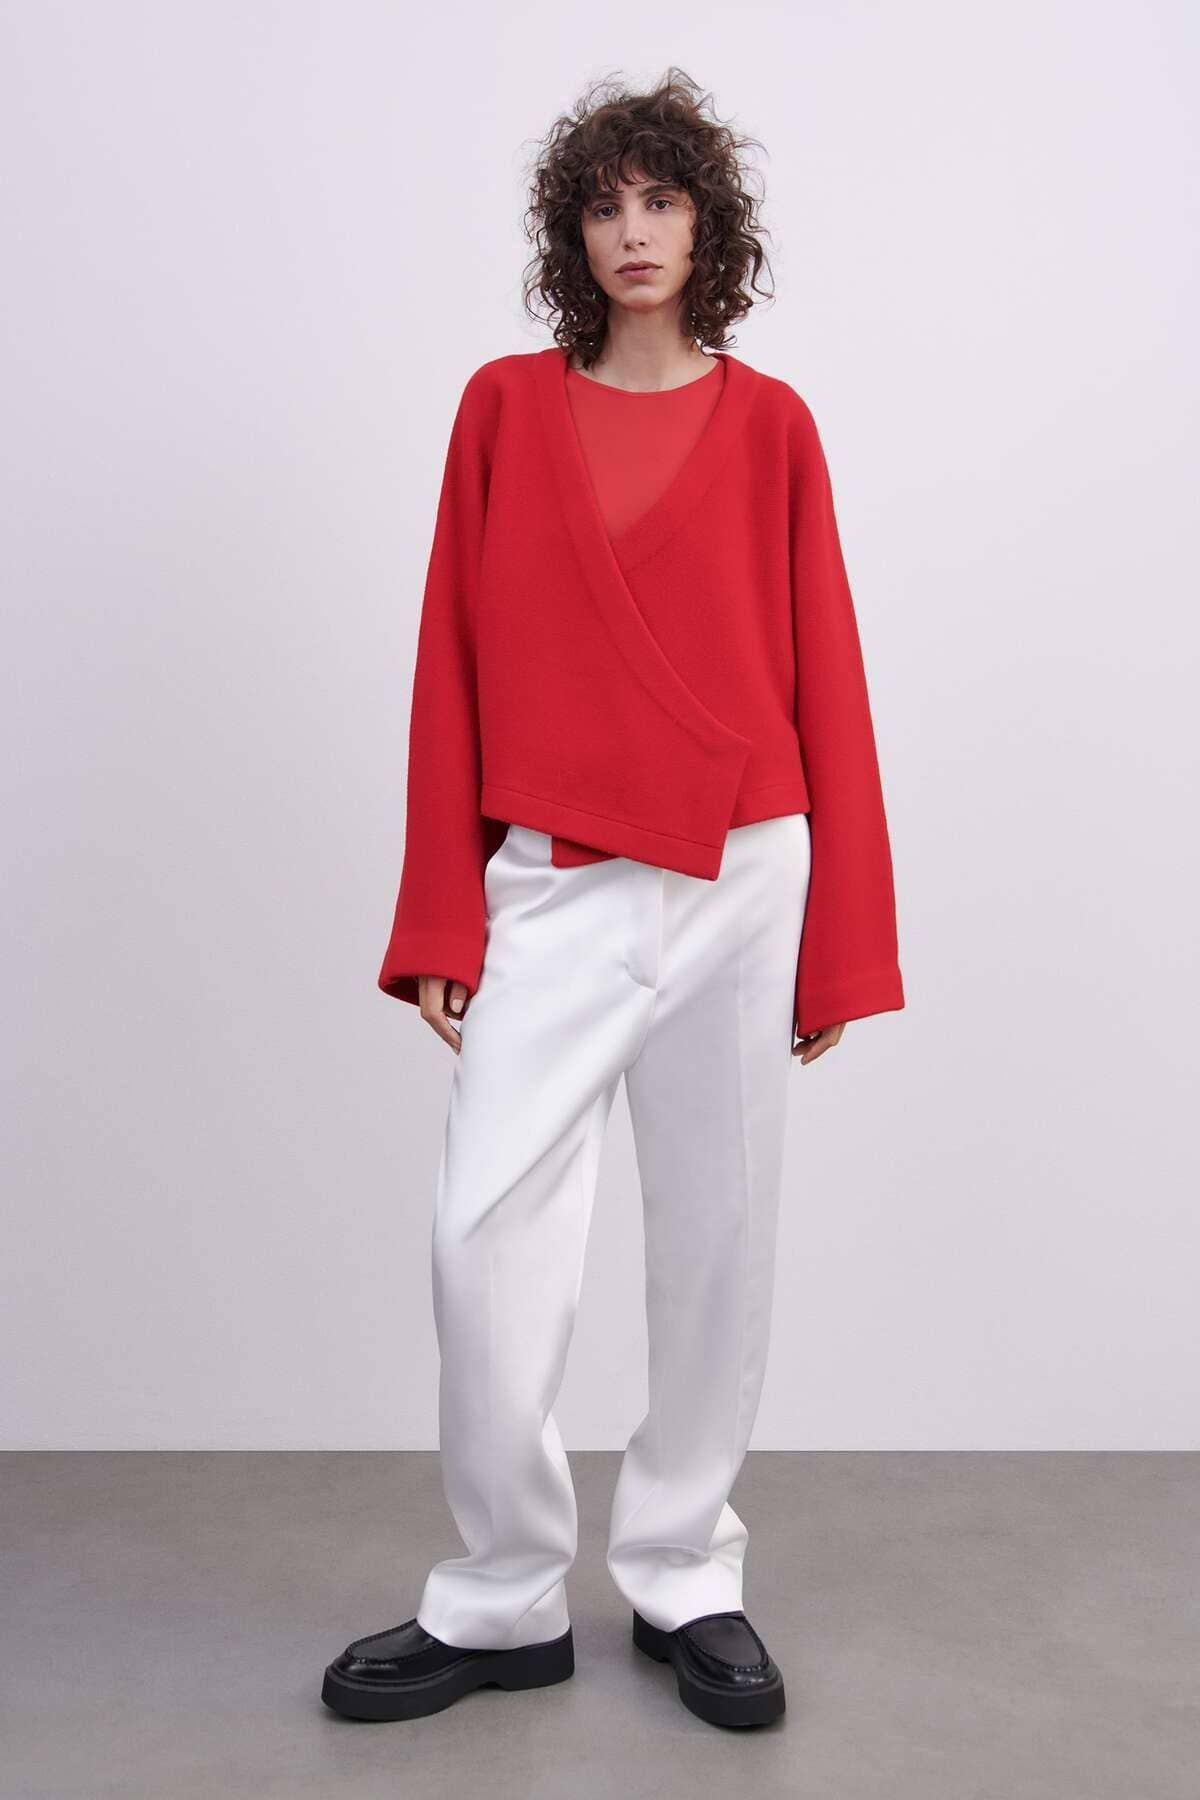 Zara Abrigo Kimono Corto 100 Lana Limited Edition